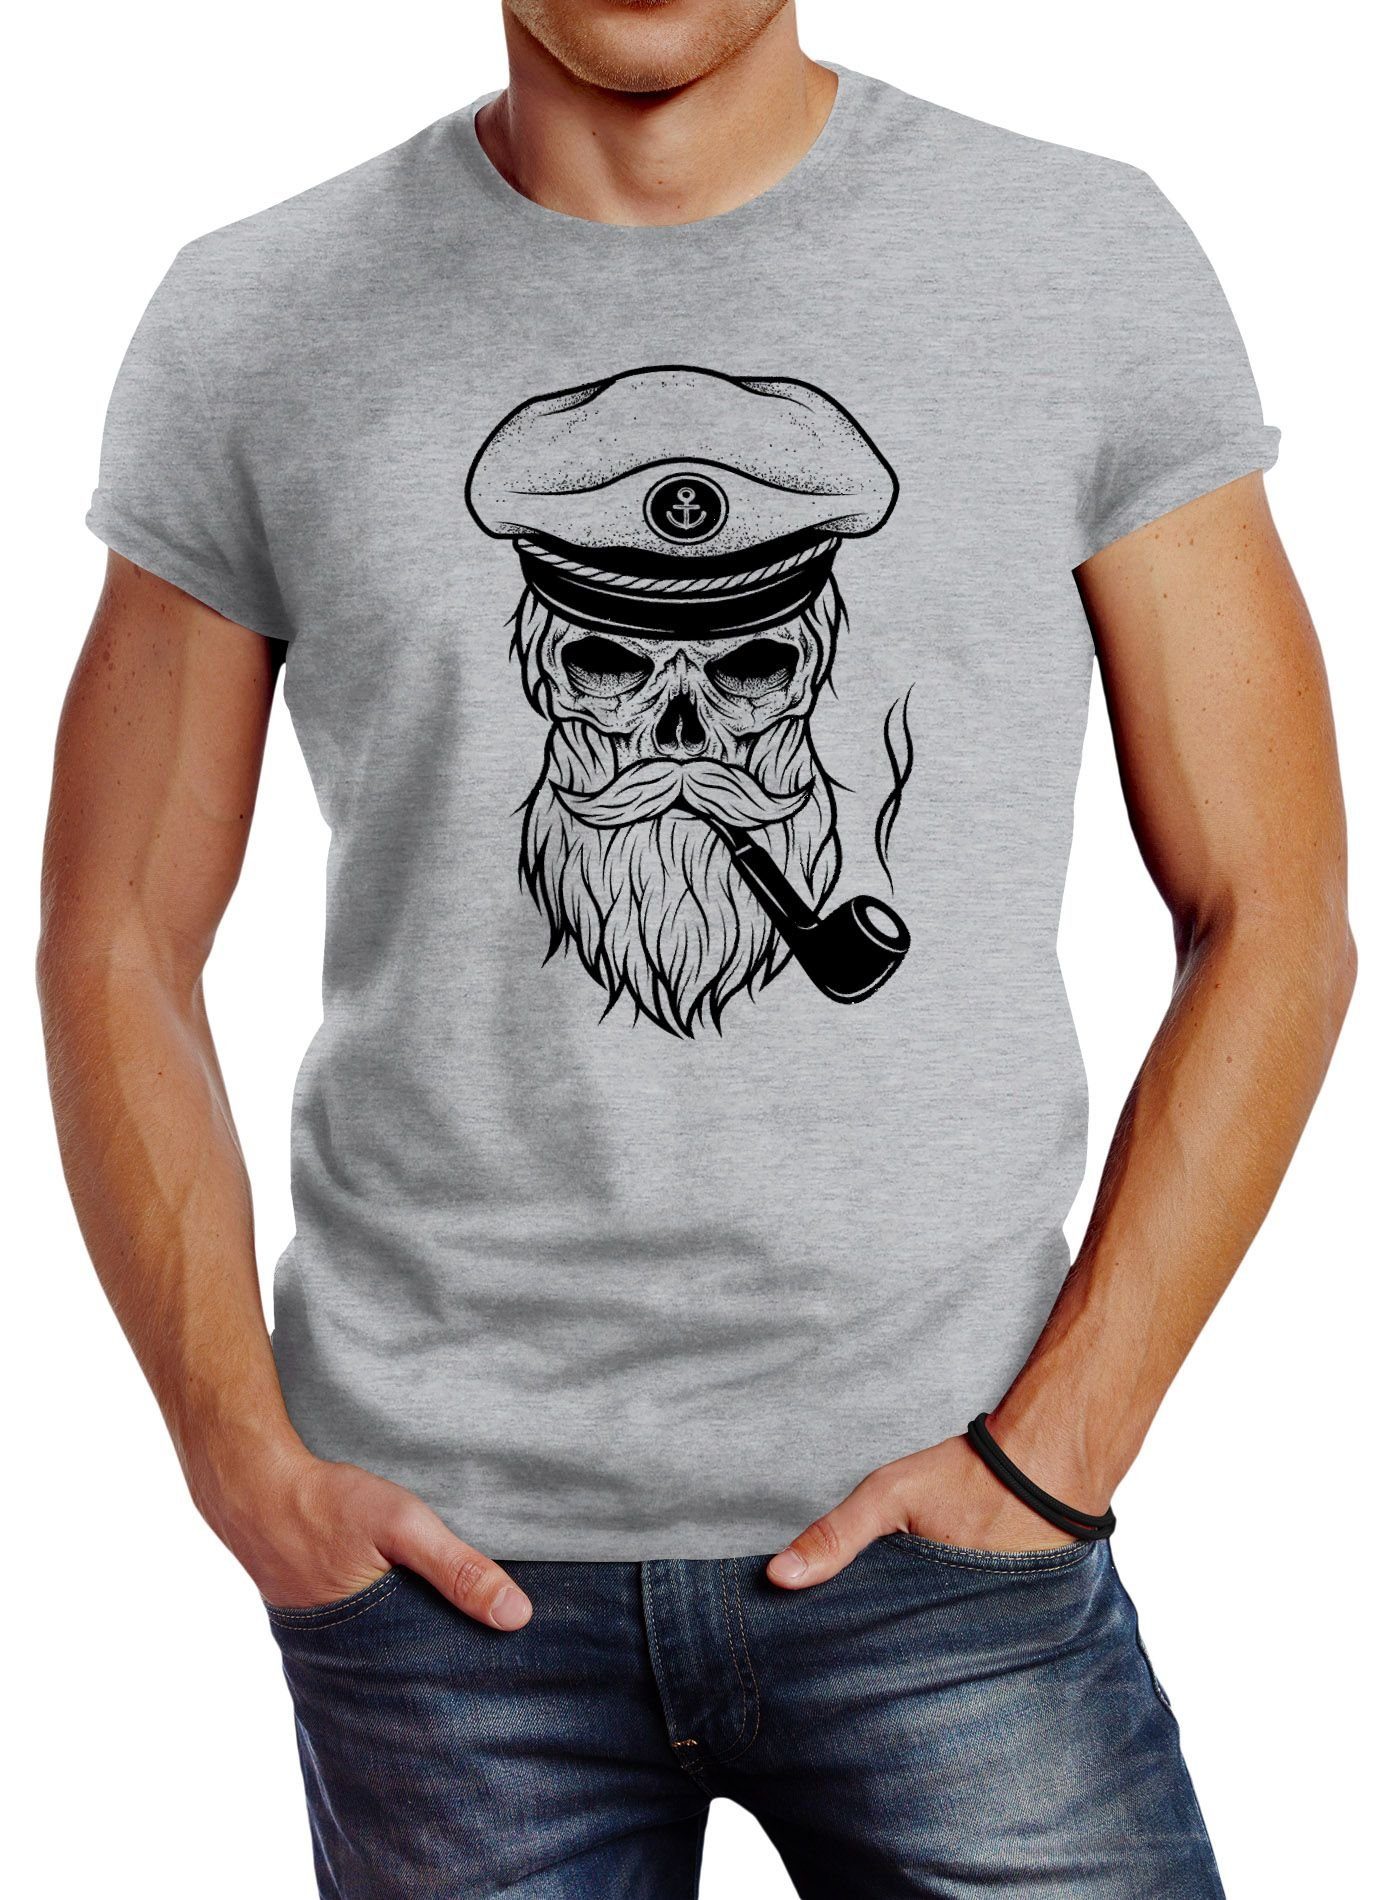 Captain Print Fit Herren Kapitän Neverless Print-Shirt Neverless® Totenkopf mit Slim T-Shirt grau Skull Hipster